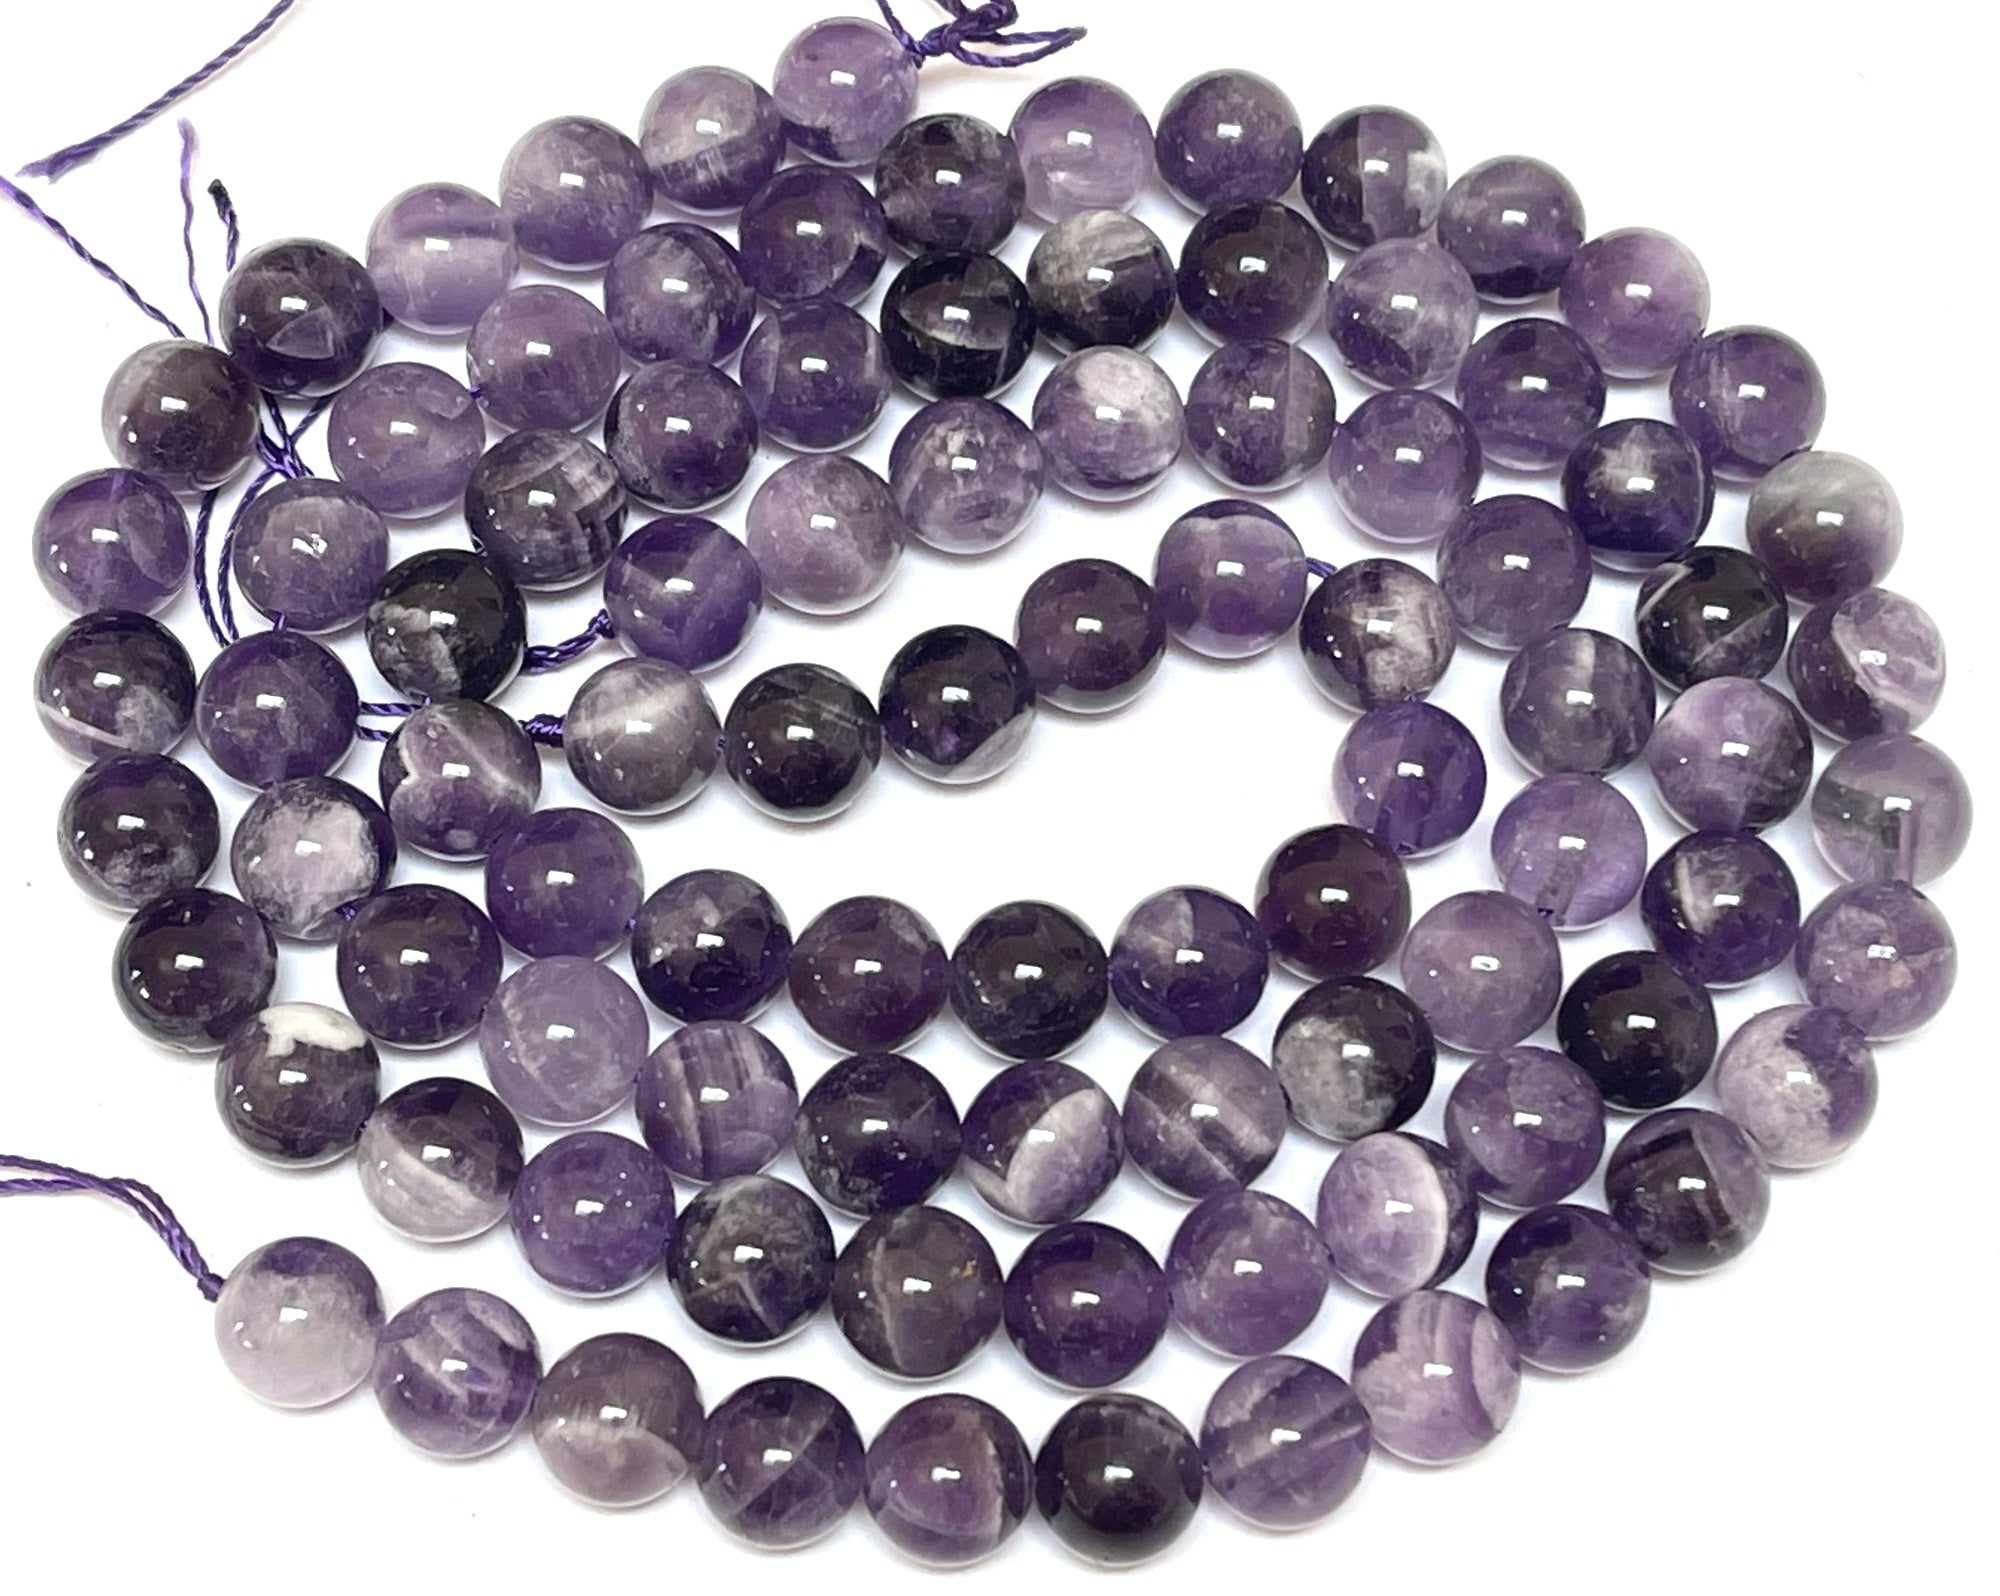 Sage Amethyst 8mm round polished natural gemstone beads 15.5" strand - Oz Beads 